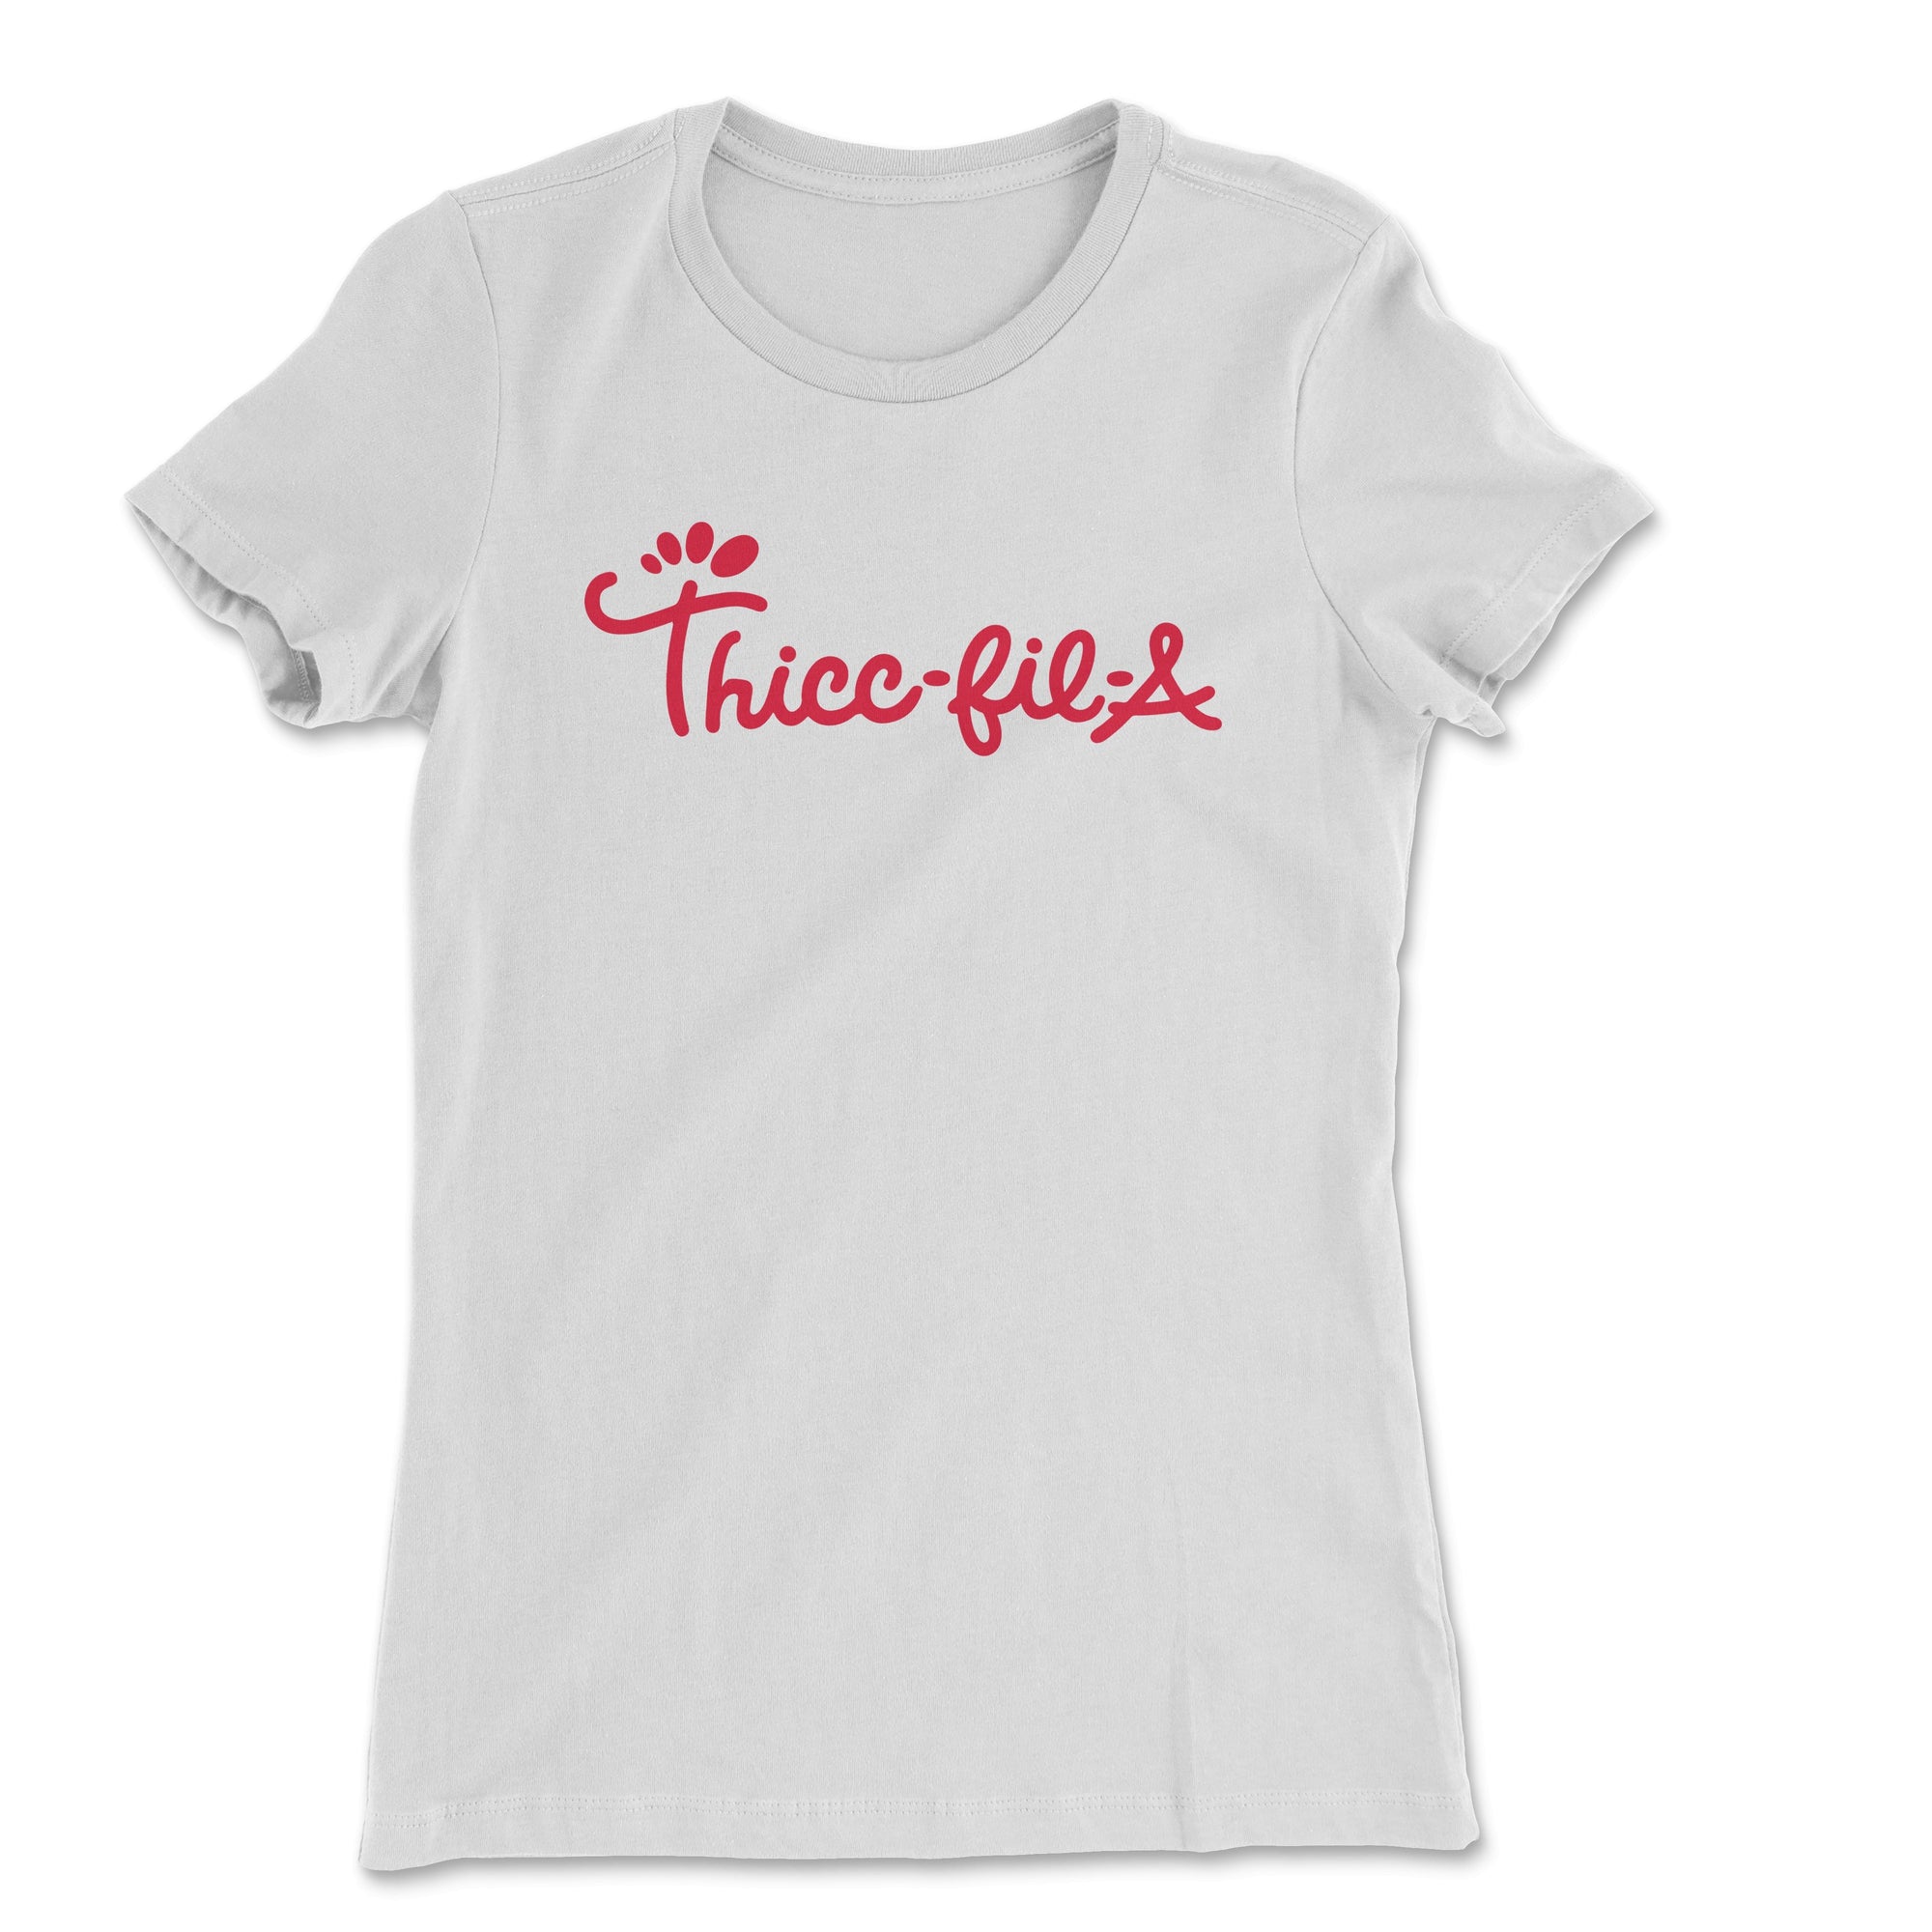 Thicc-Fil-A Women's T-Shirt - anishphilip